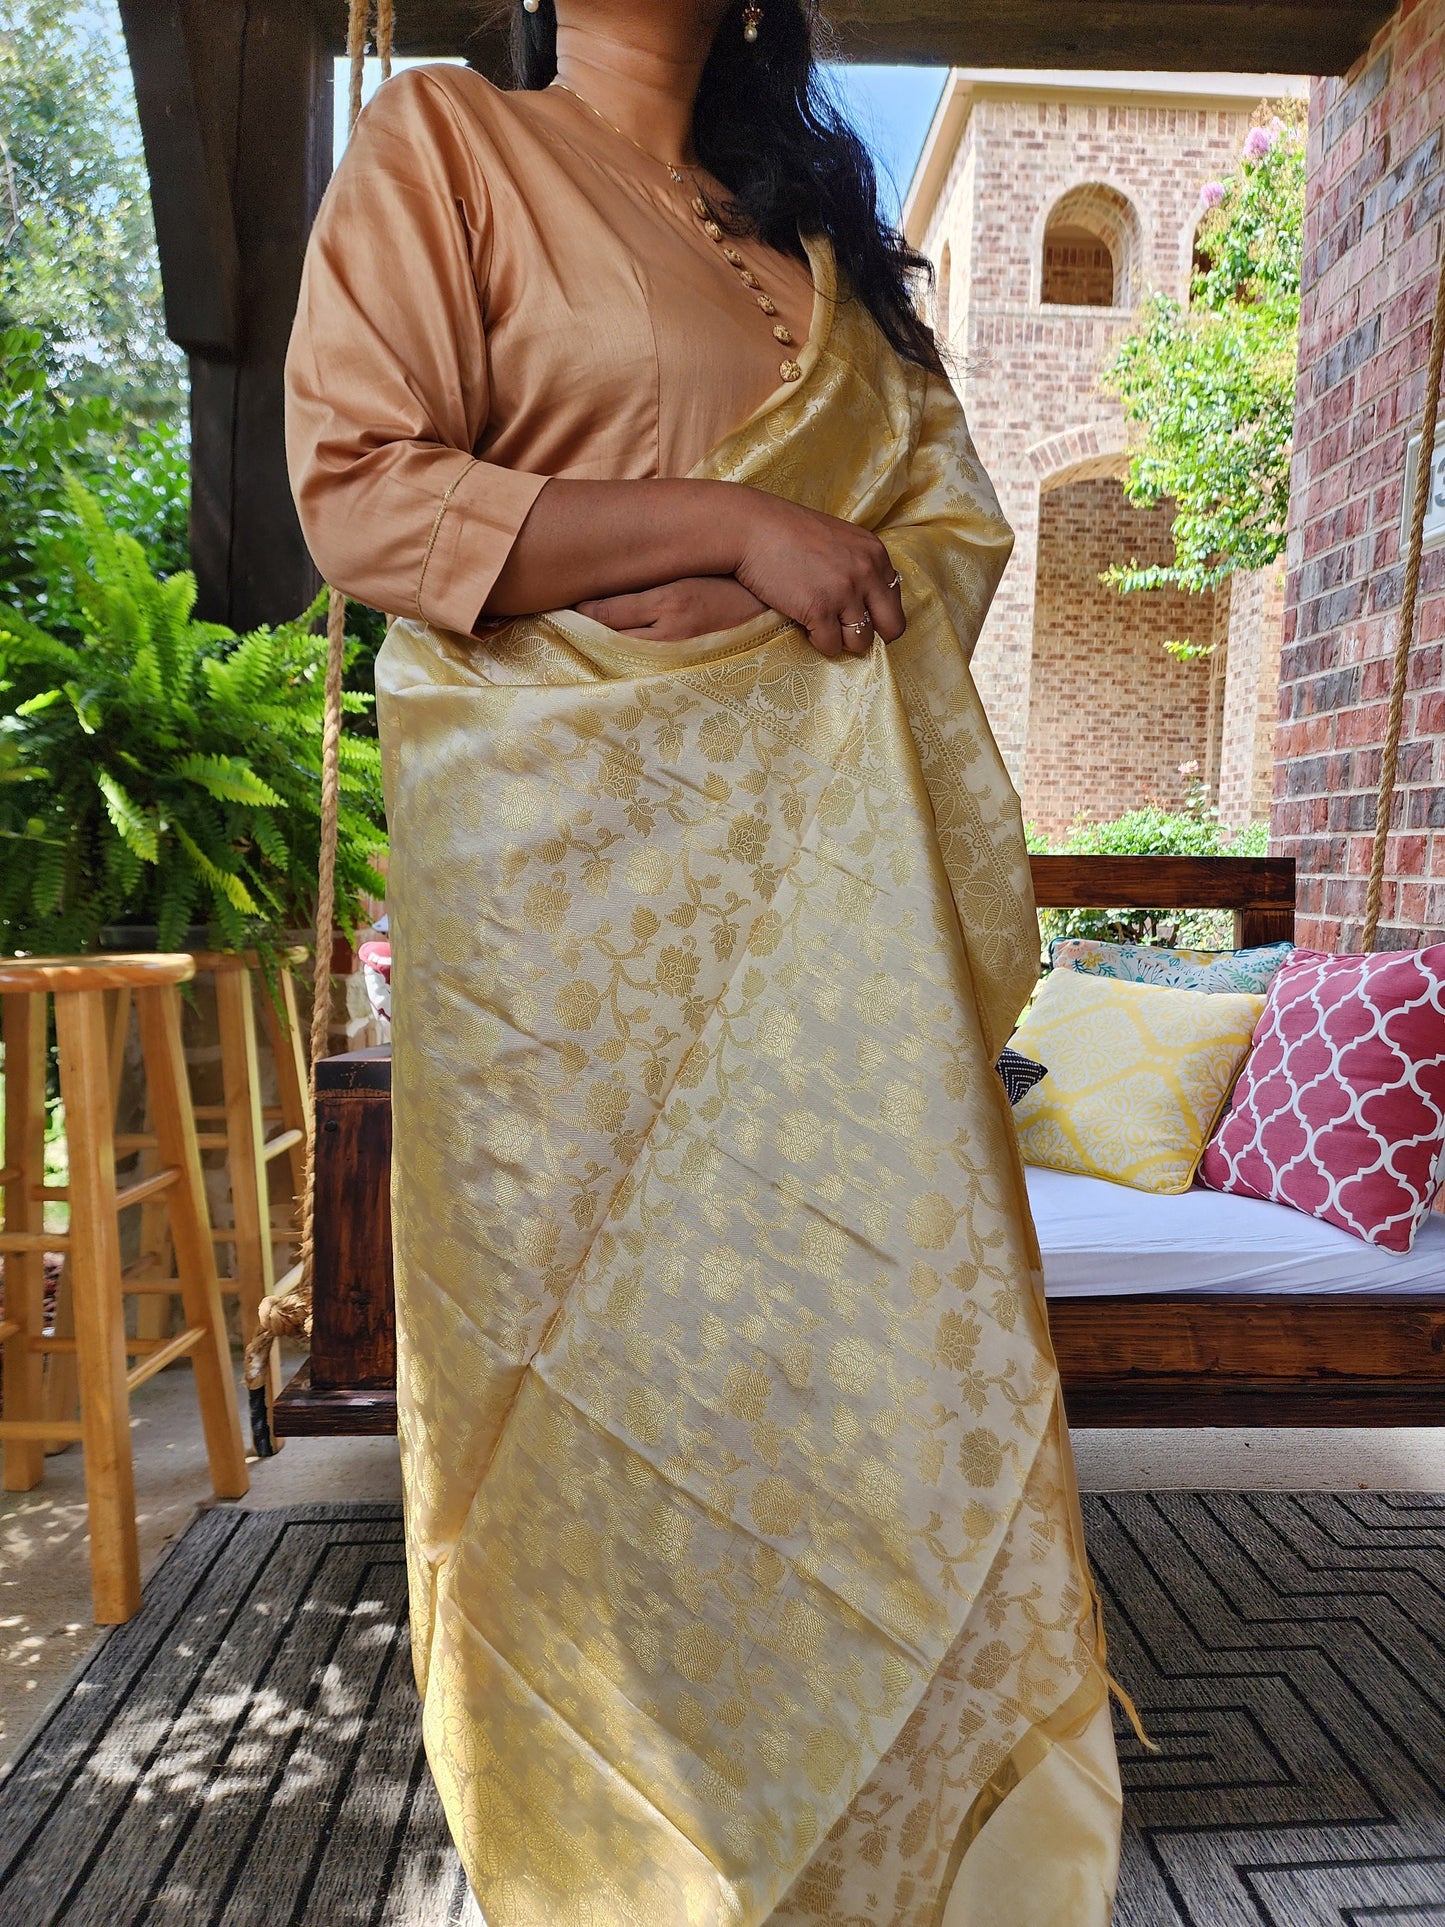 Indian A Line Style Kurta / Kurti, Beige and Gold Color Elegant Long Suit Dress, Leggings & Banarasi Dupatta set, Silky Smooth Designer Suit